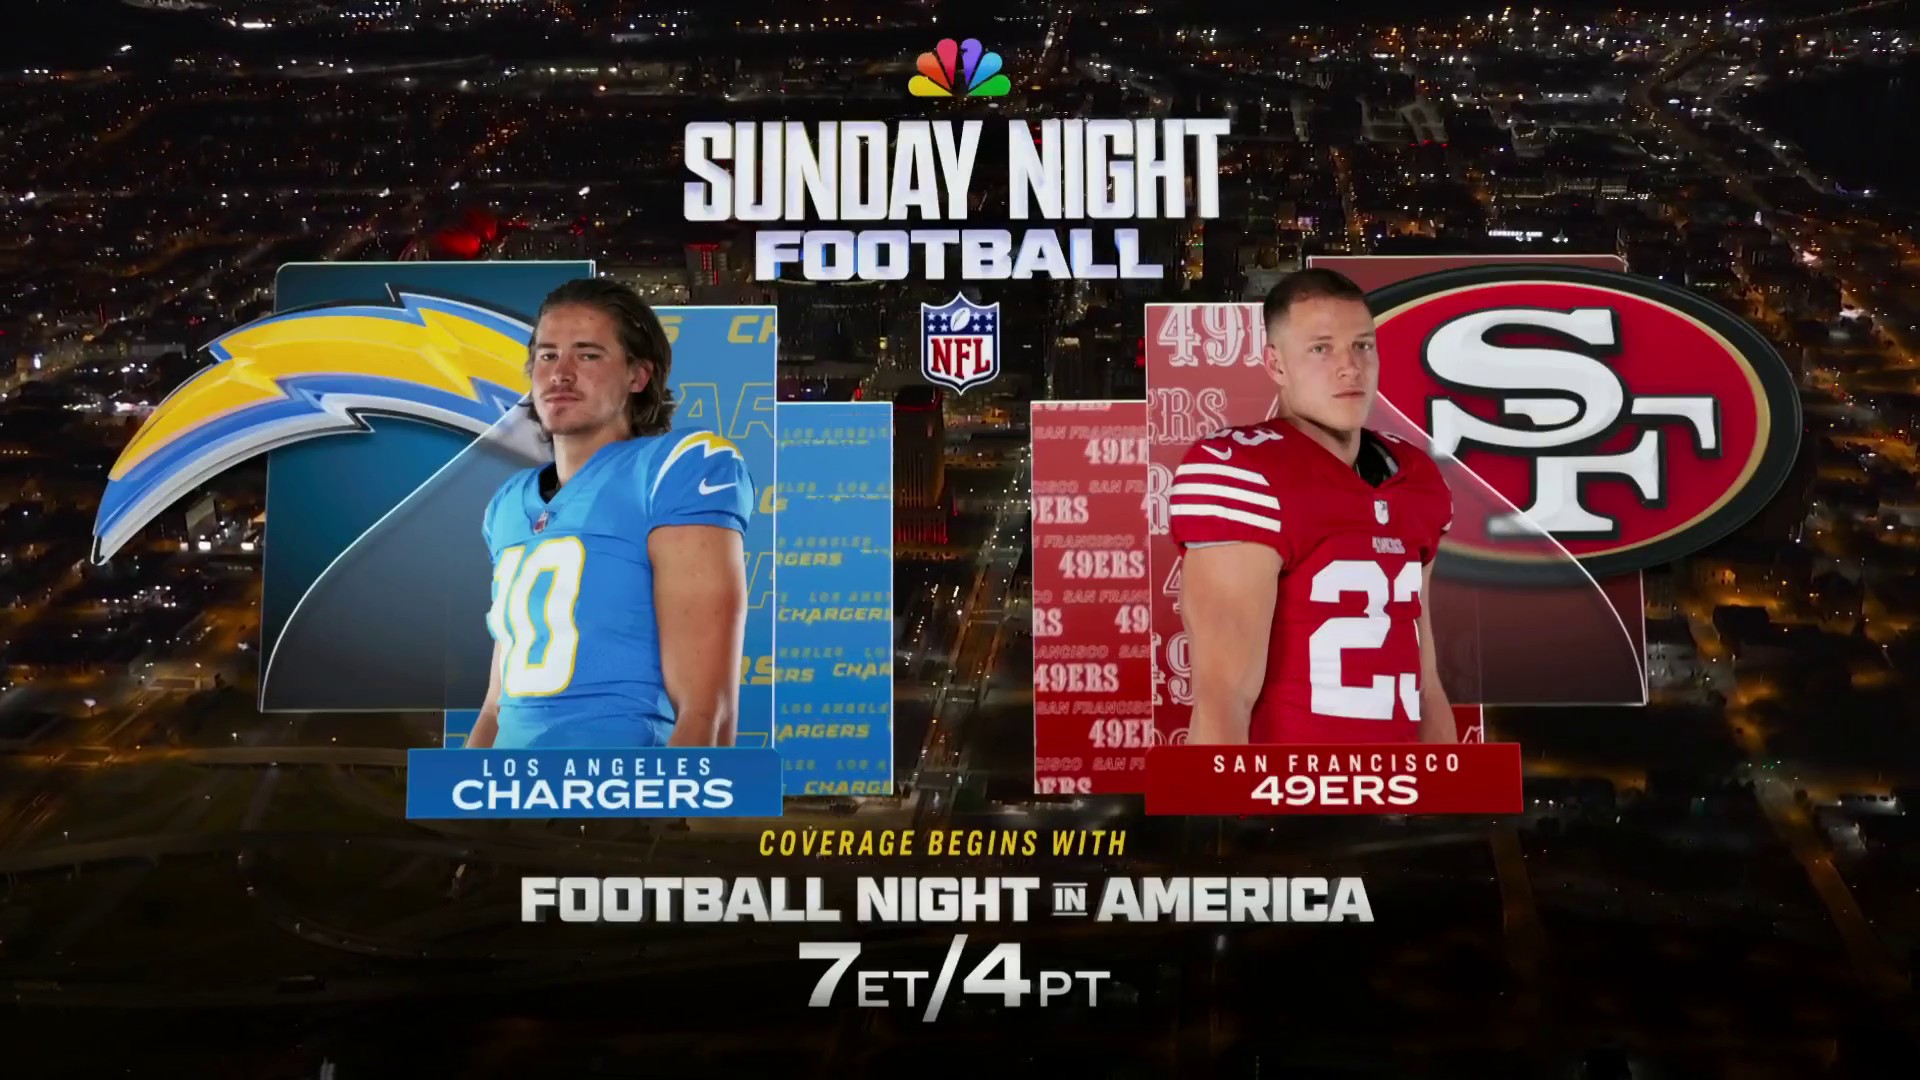 Sunday Night Football on NBC on X: 'Next week on Sunday Night Football!  #BoltUp vs. #FTTB - who ya got?!  / X